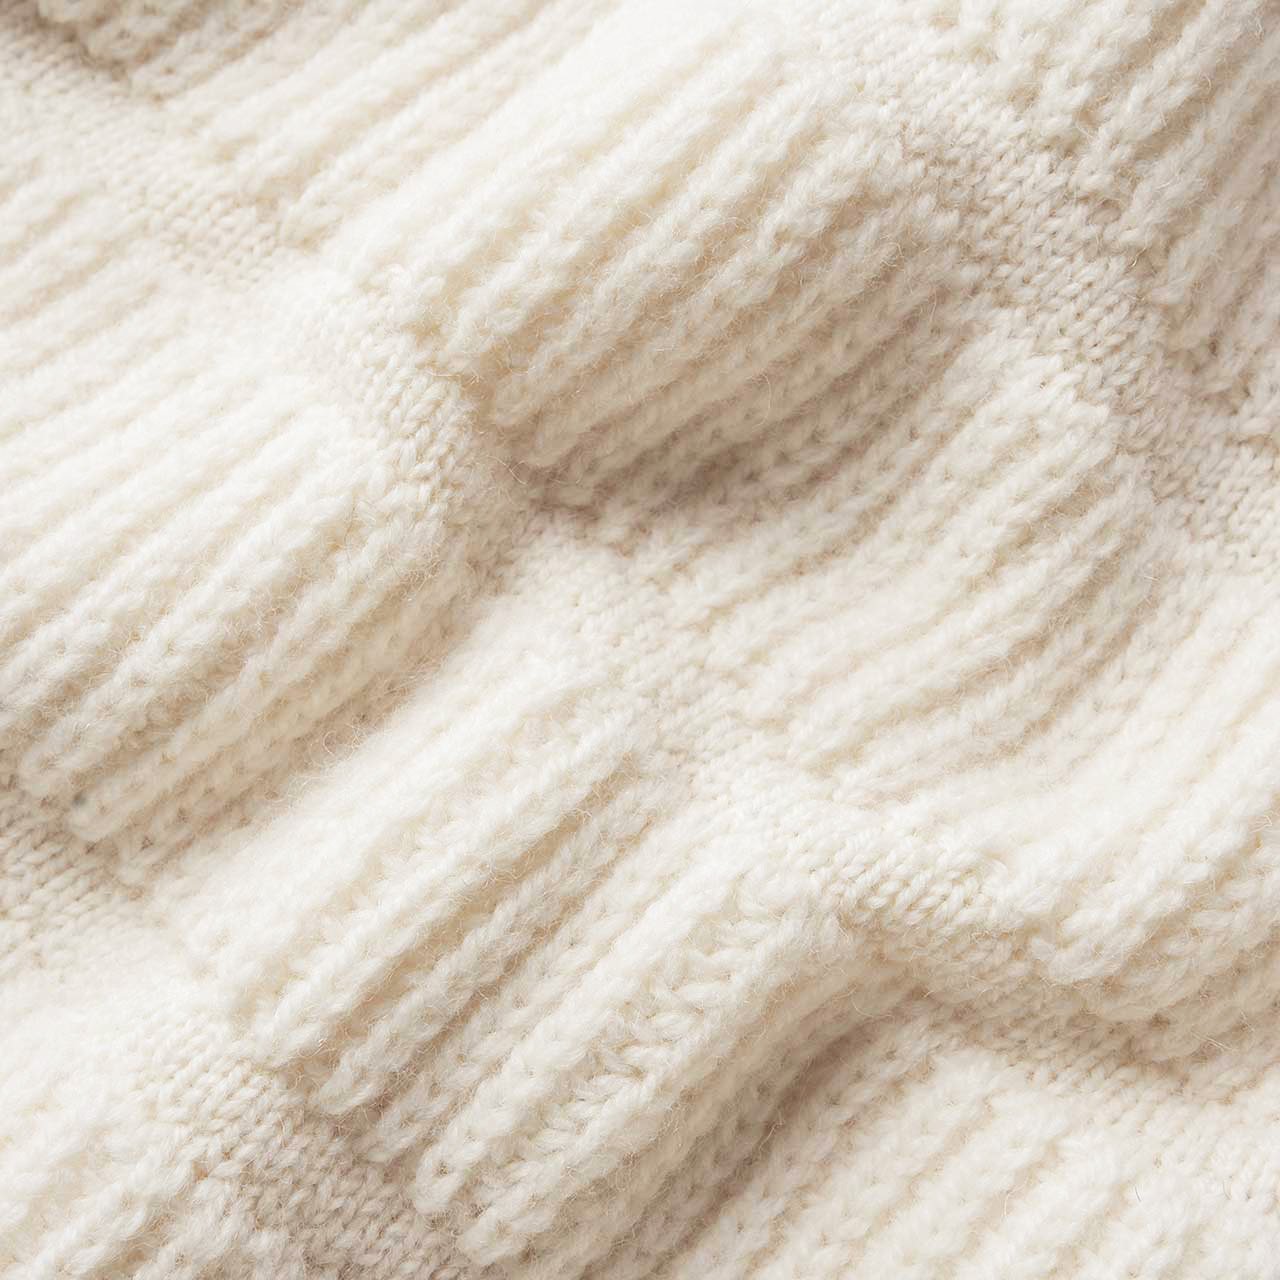 henrik vibskov chunky tubes knit (whisper white) - aw20-m702 - a.plus - Image - 4